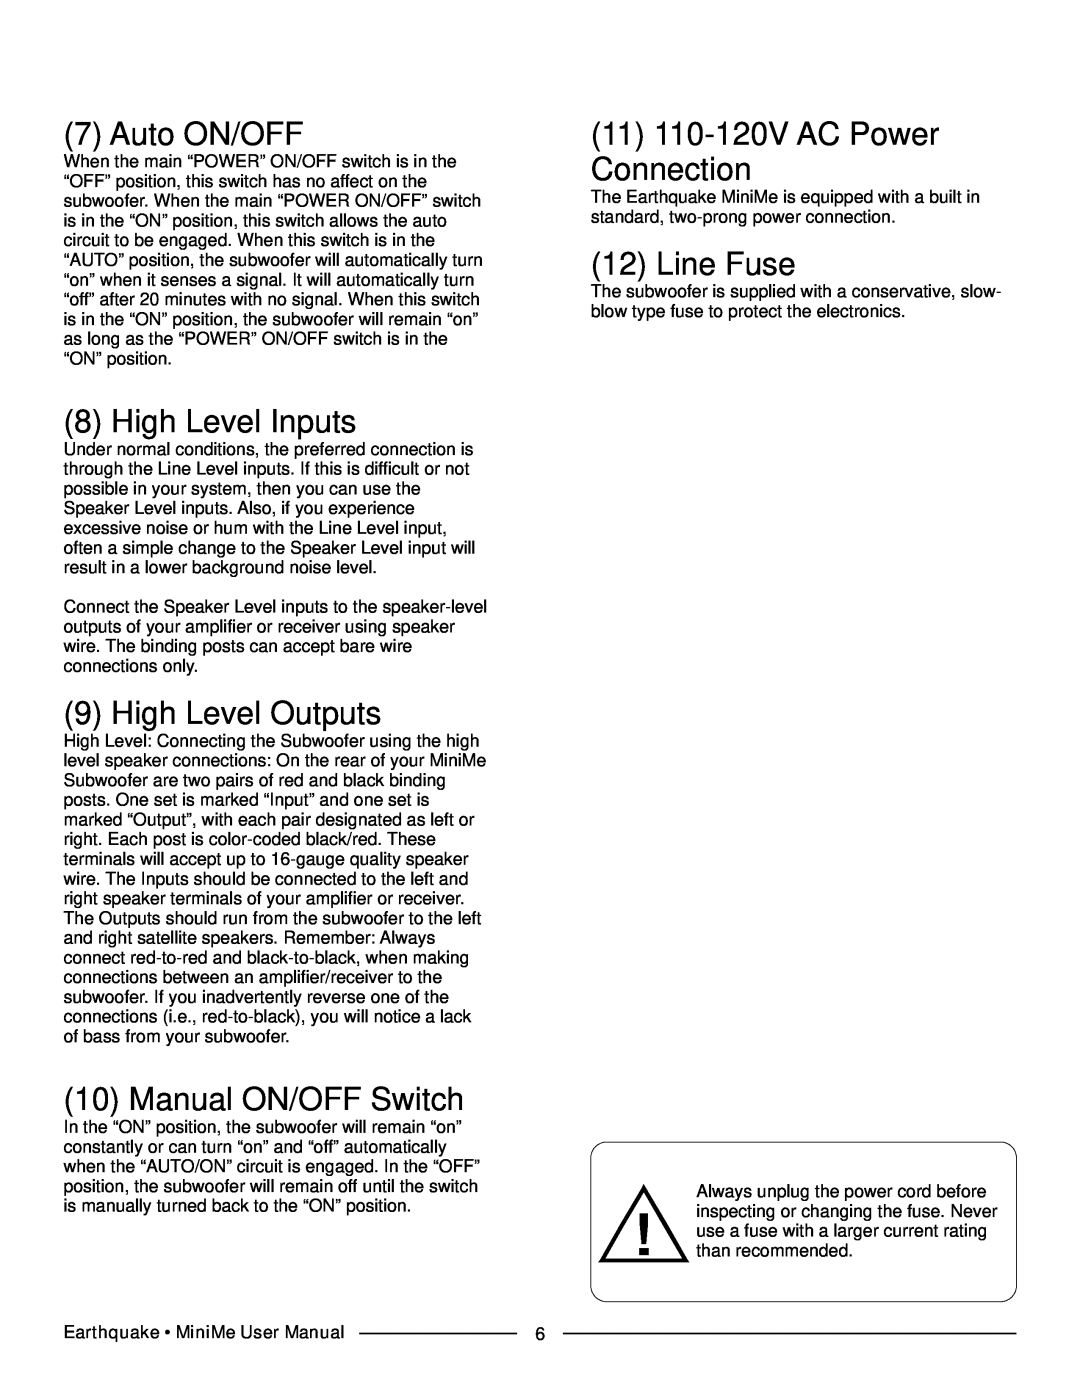 Earthquake Sound P8 manual Auto ON/OFF, High Level Inputs, High Level Outputs, Manual ON/OFF Switch, Line Fuse 